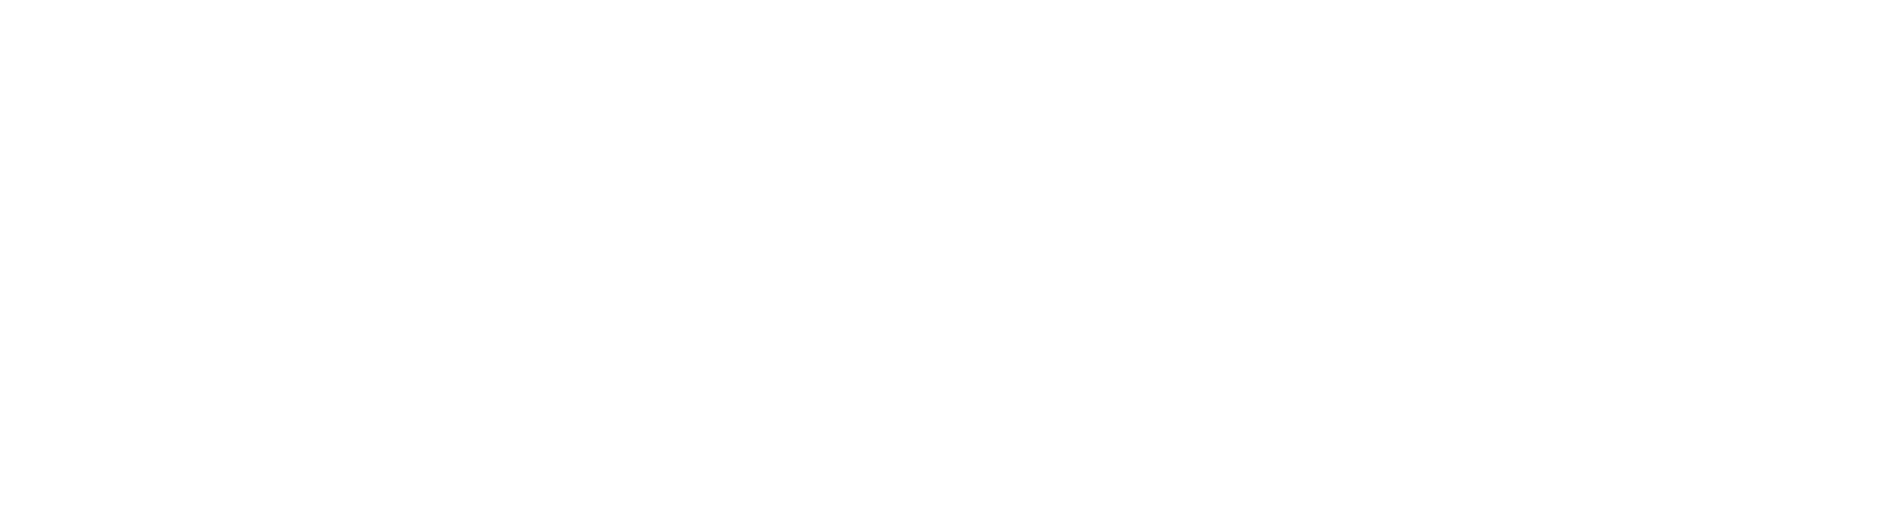 DeRoyal Logo